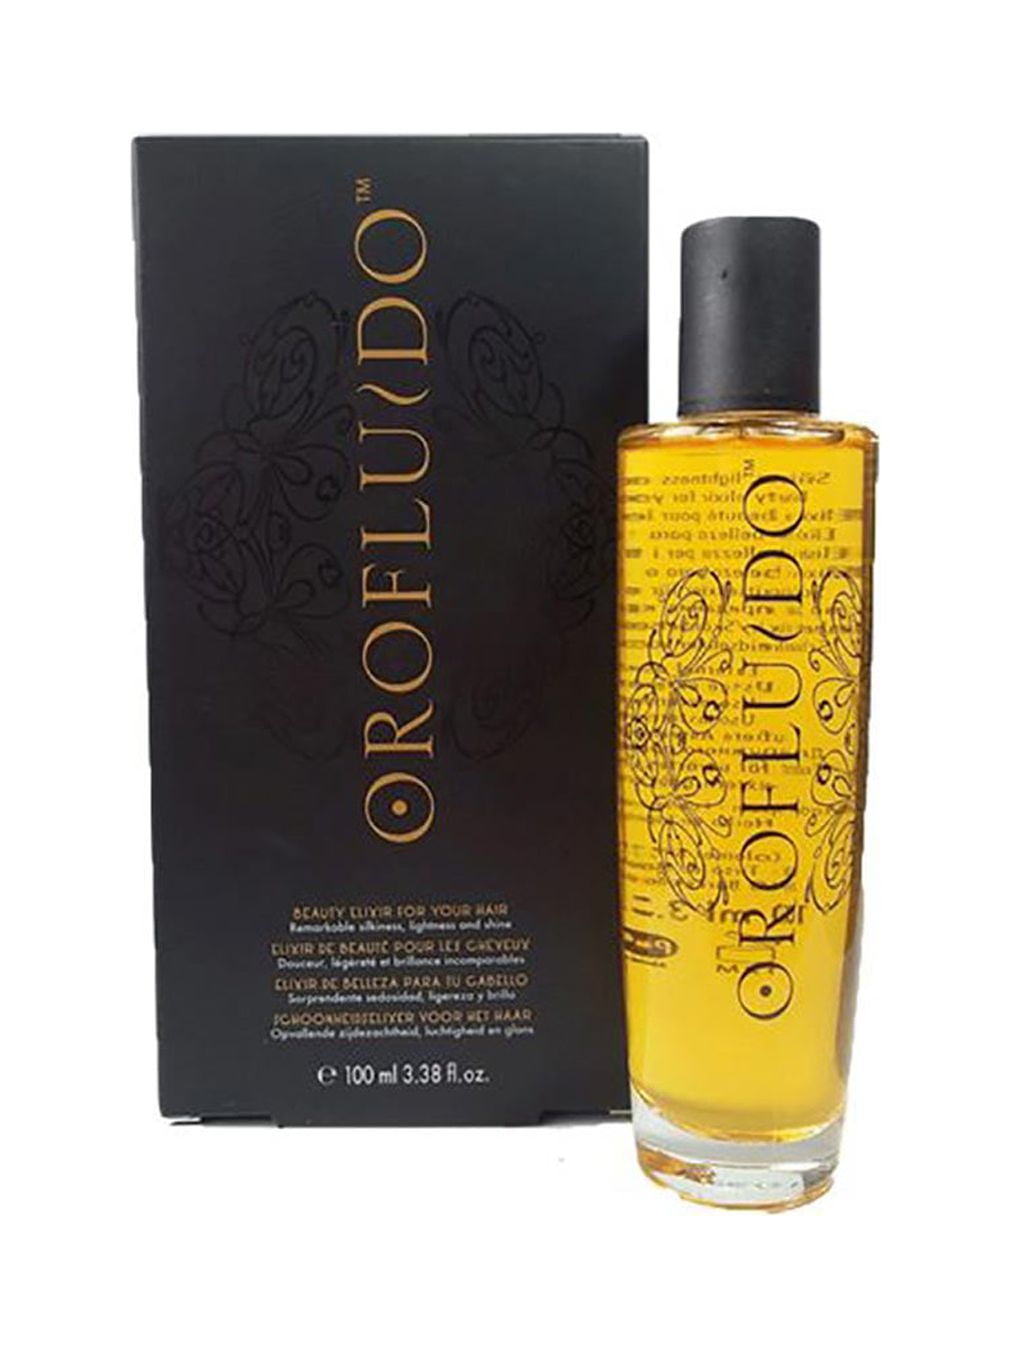 Milliliters 100 Shine Ounce Revlon Original Orofluido Softness Elixir And 3.4